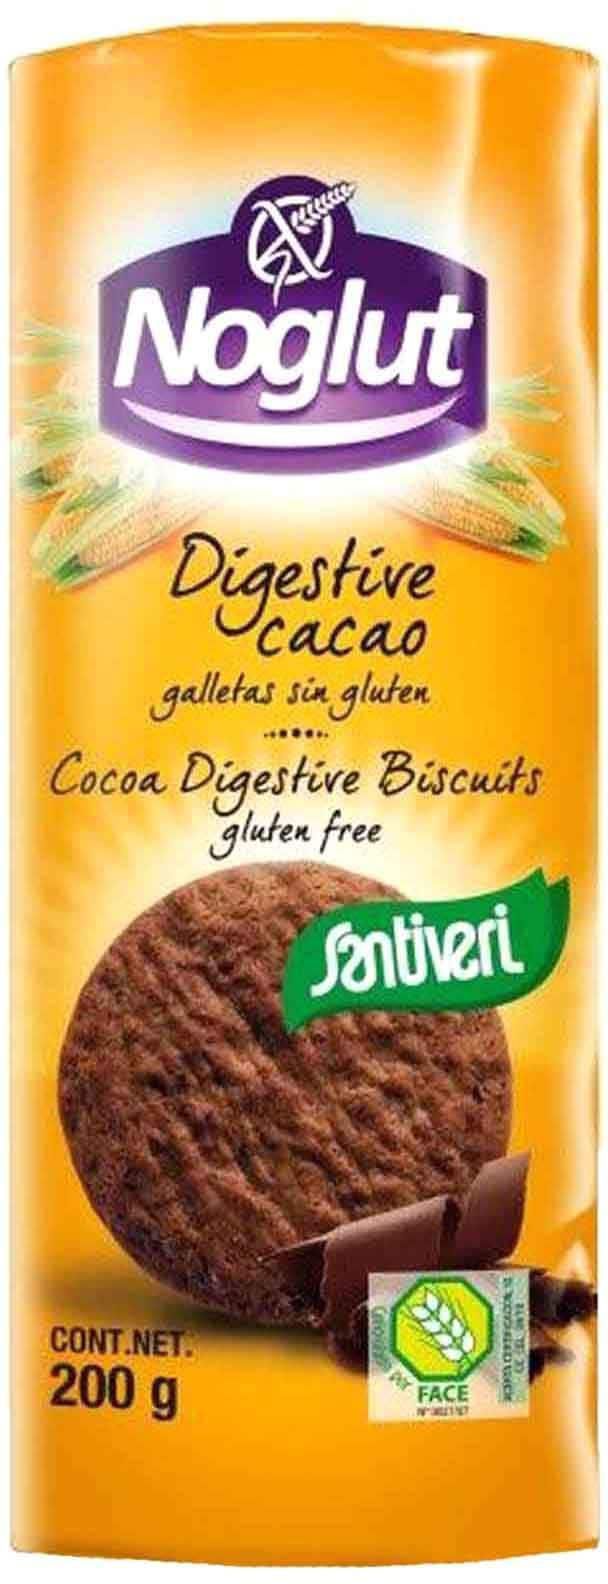 Noglut Cocoa Digestive Biscuits 200g